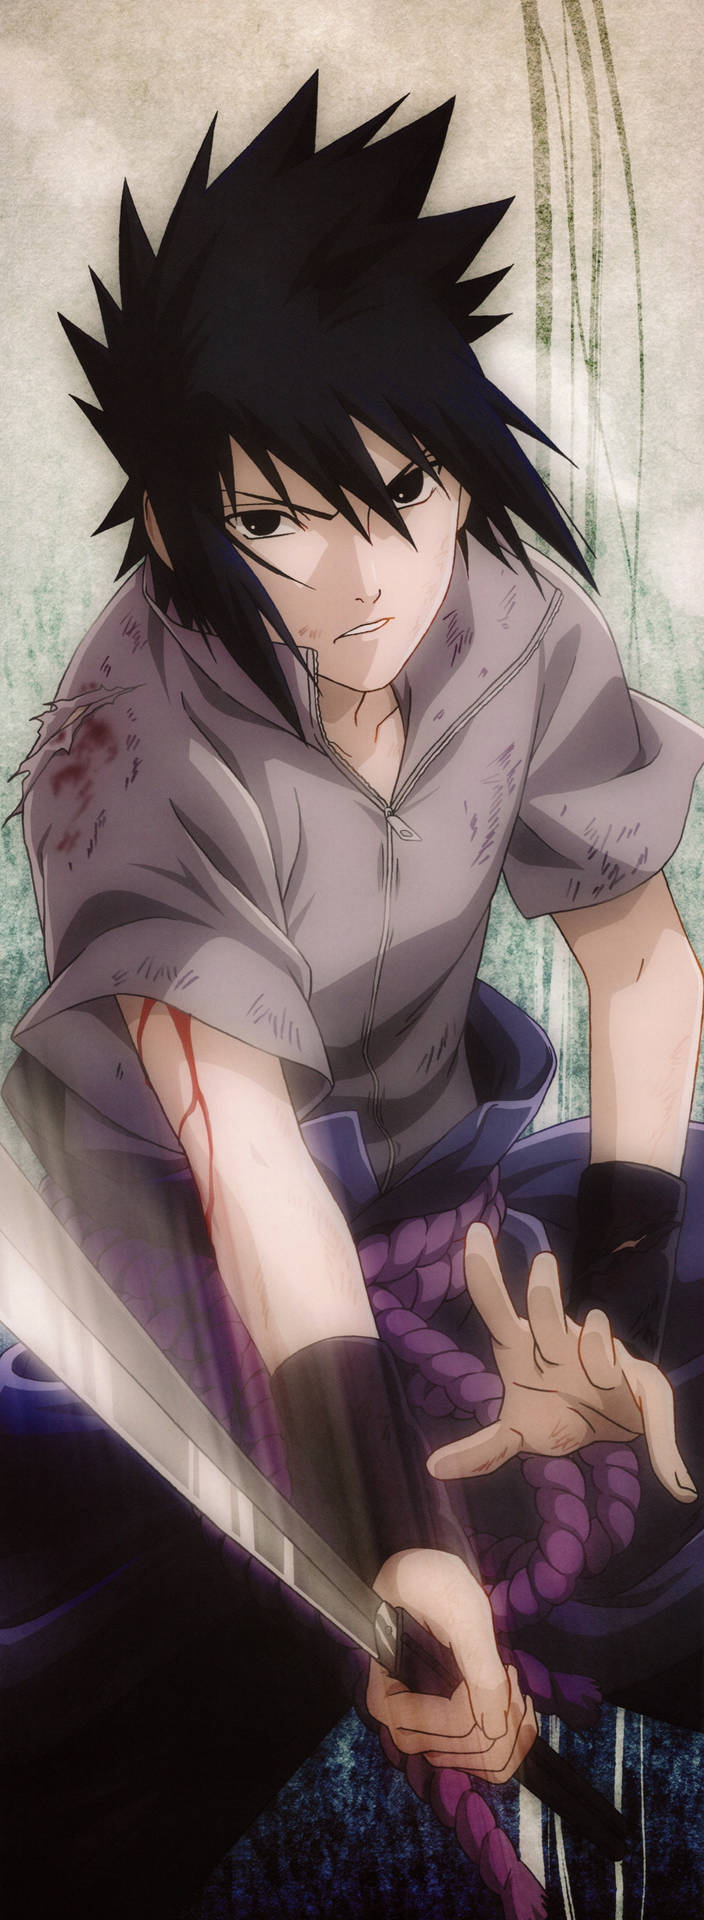 Wounded Sasuke From Naruto Mobile 4K Wallpaper